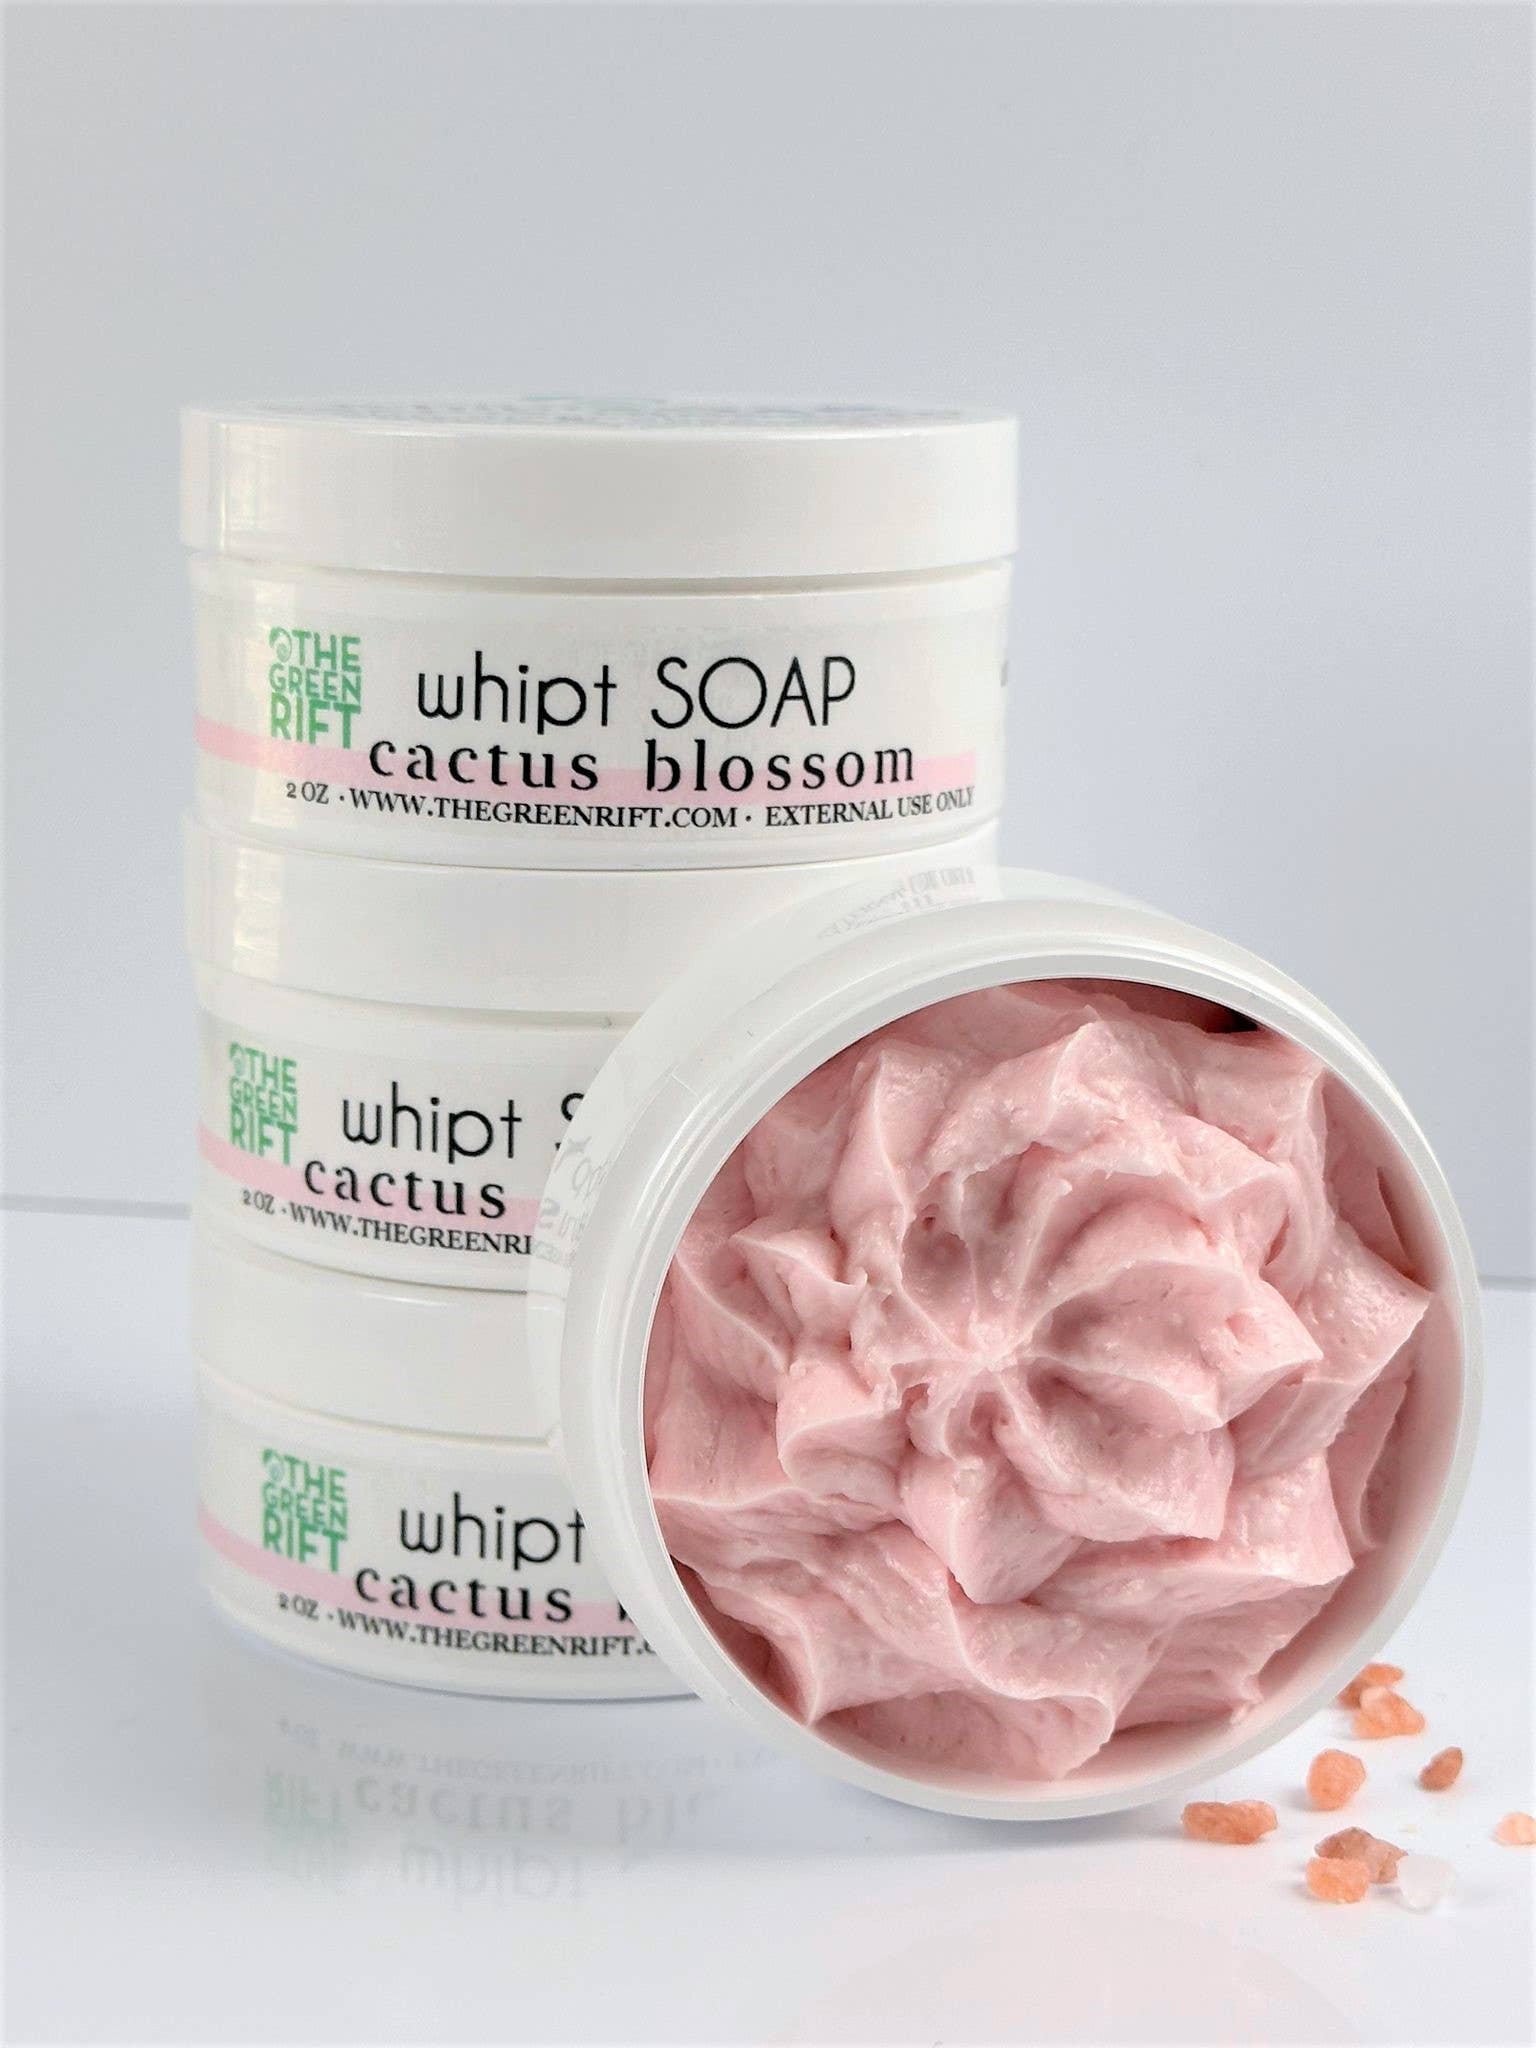 The Green Rift - Cactus Blossom Whipt Soap: 5 oz